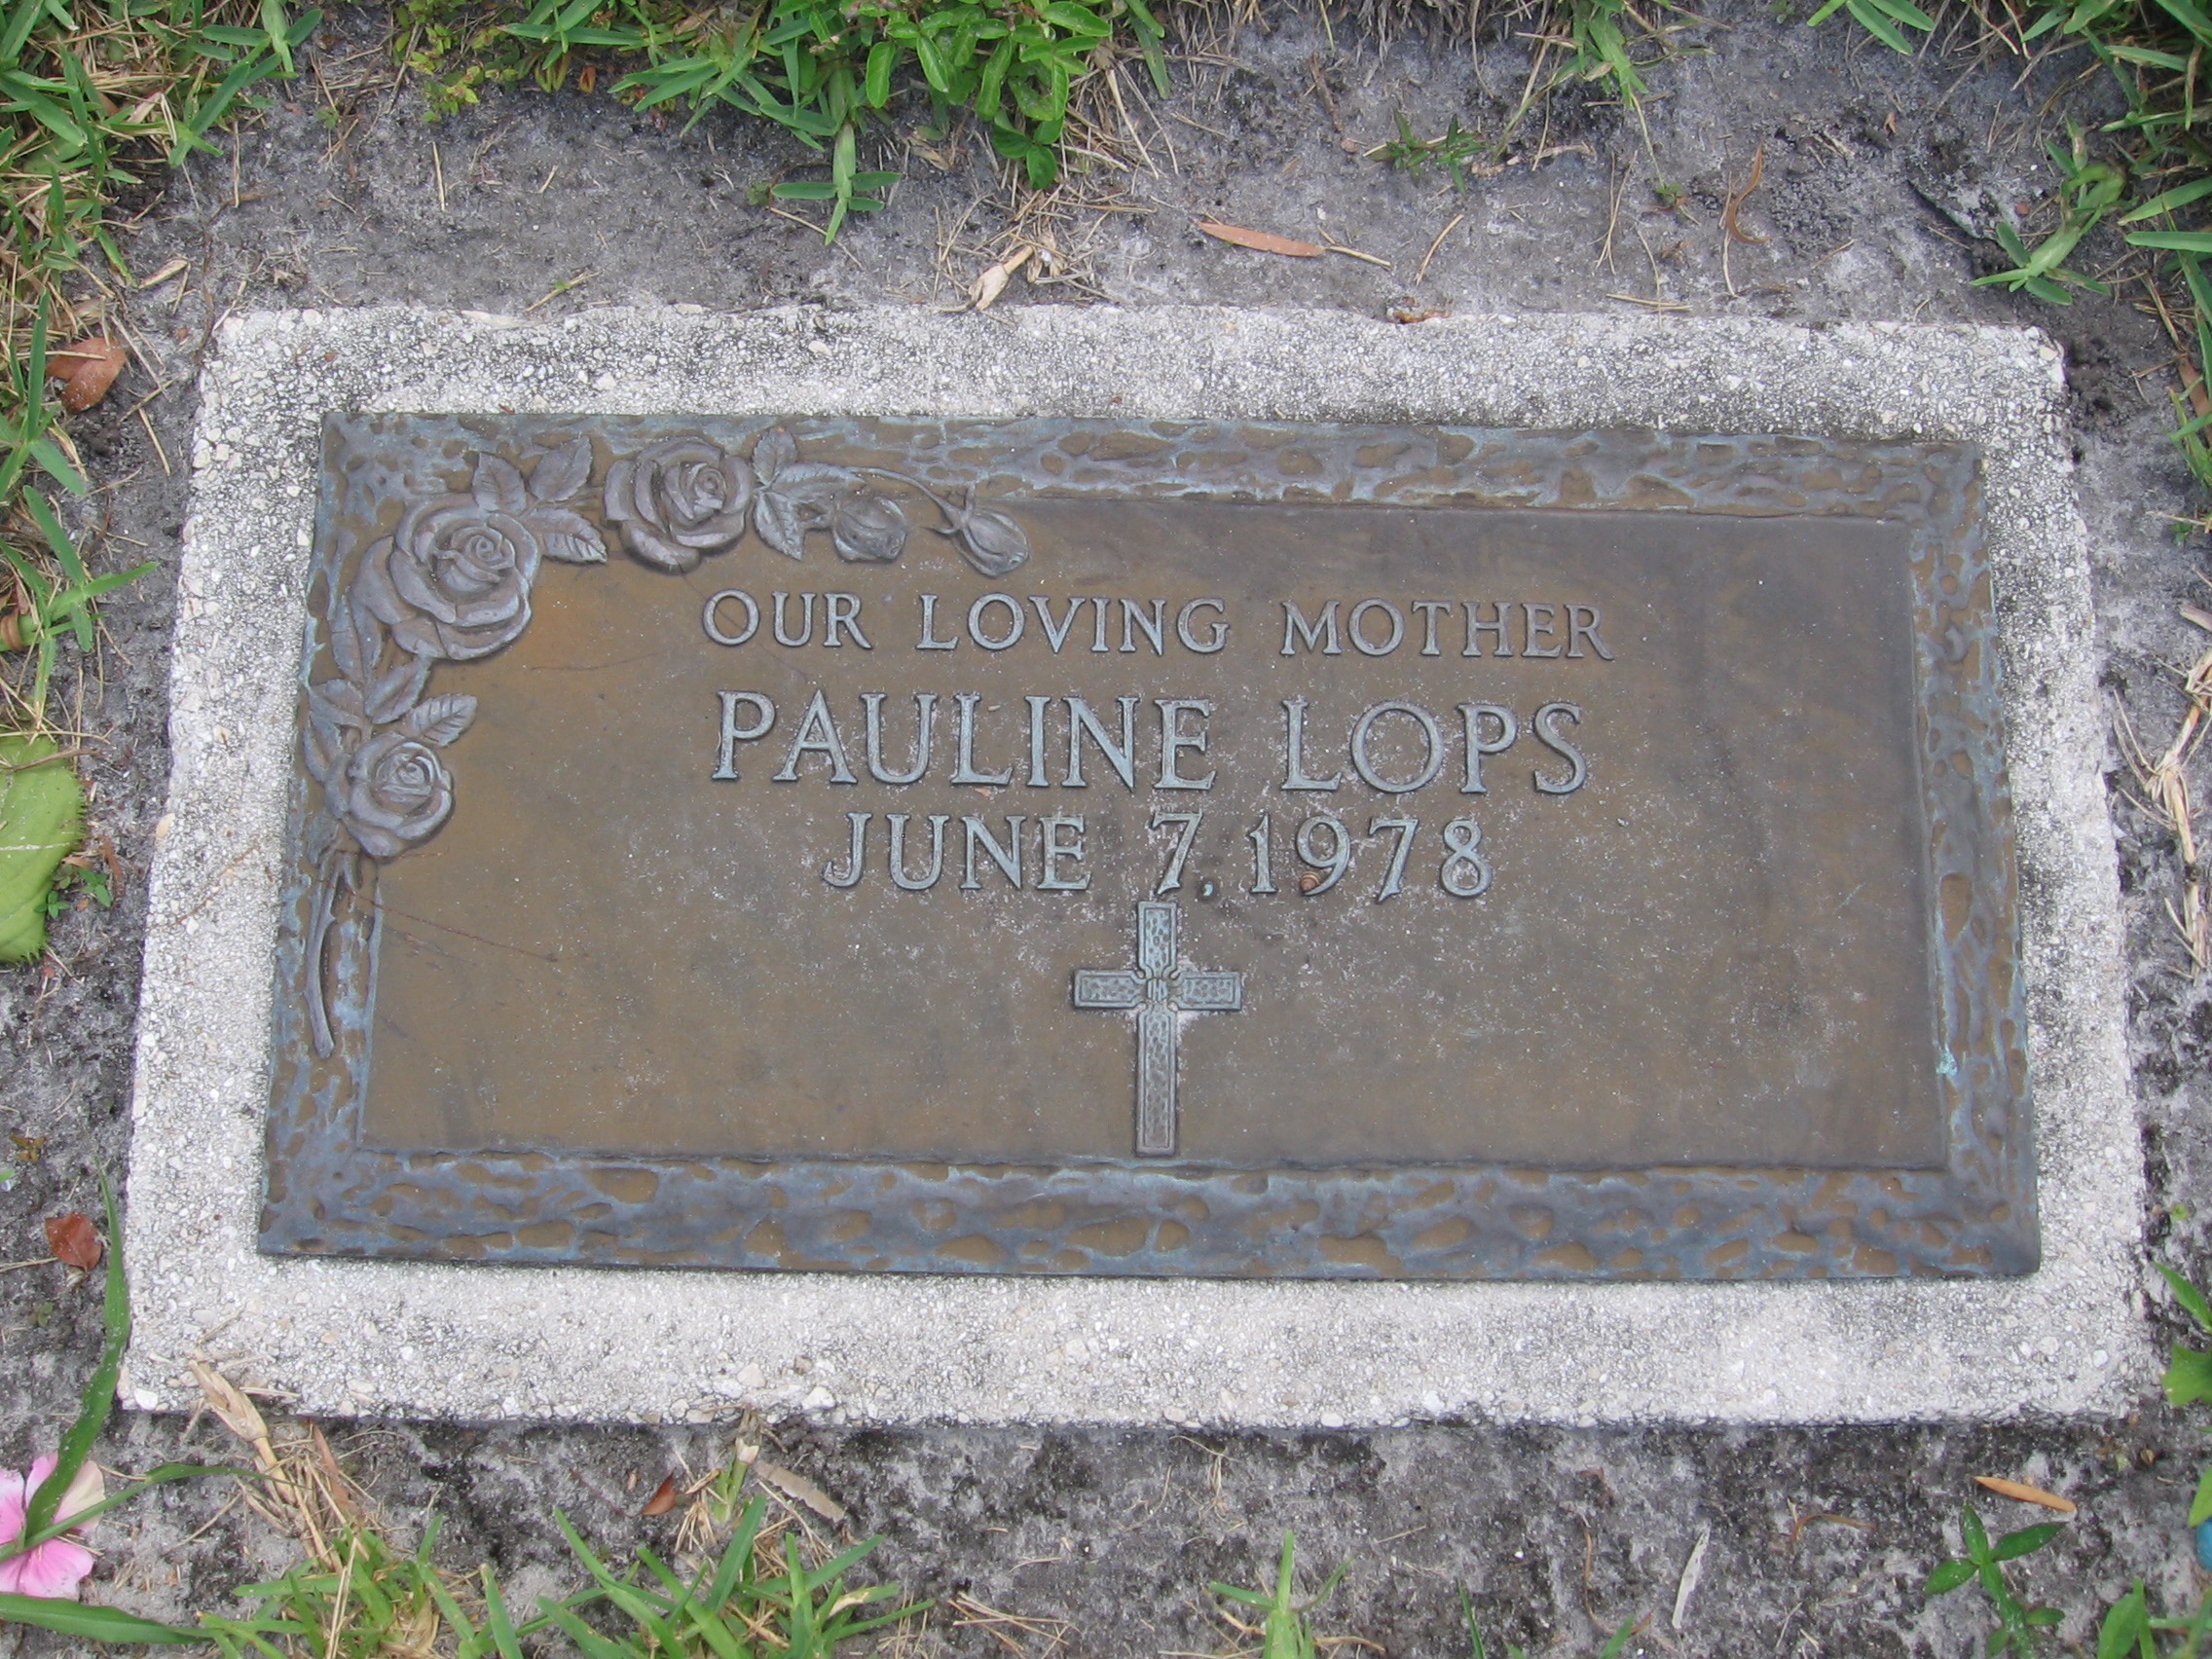 Pauline Lops